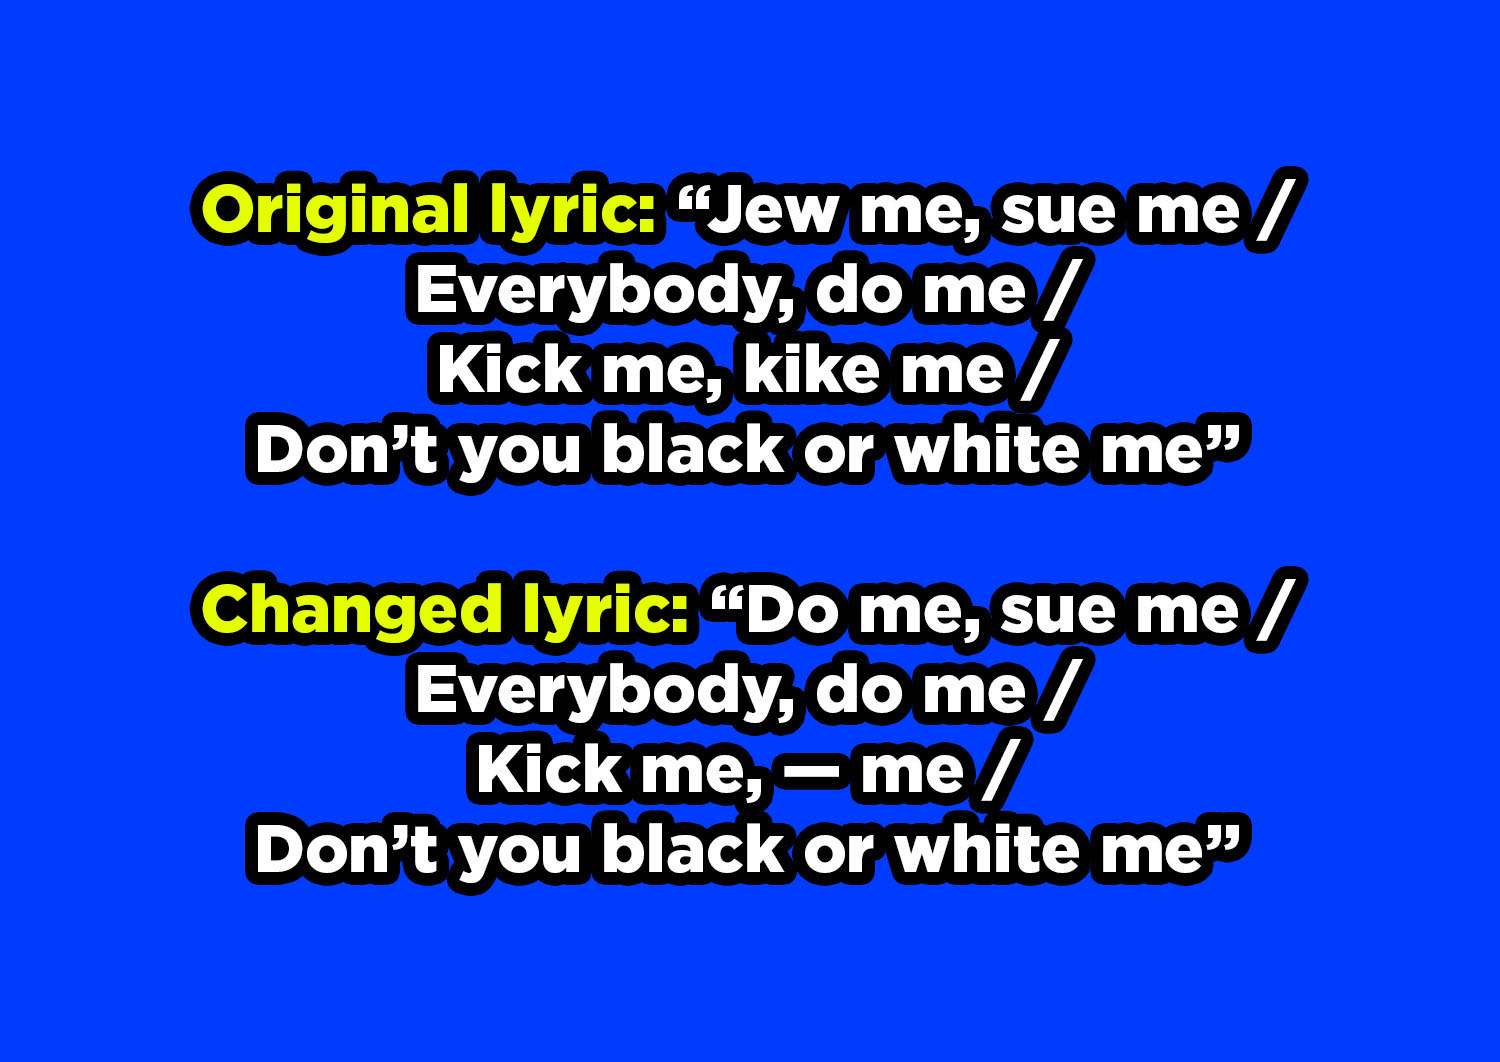 Original lyric &quot;Jew me&quot; changed to &quot;Do me,&quot; and &quot;Kick me, kike me&quot; changed to &quot;Kick me, — me&quot;